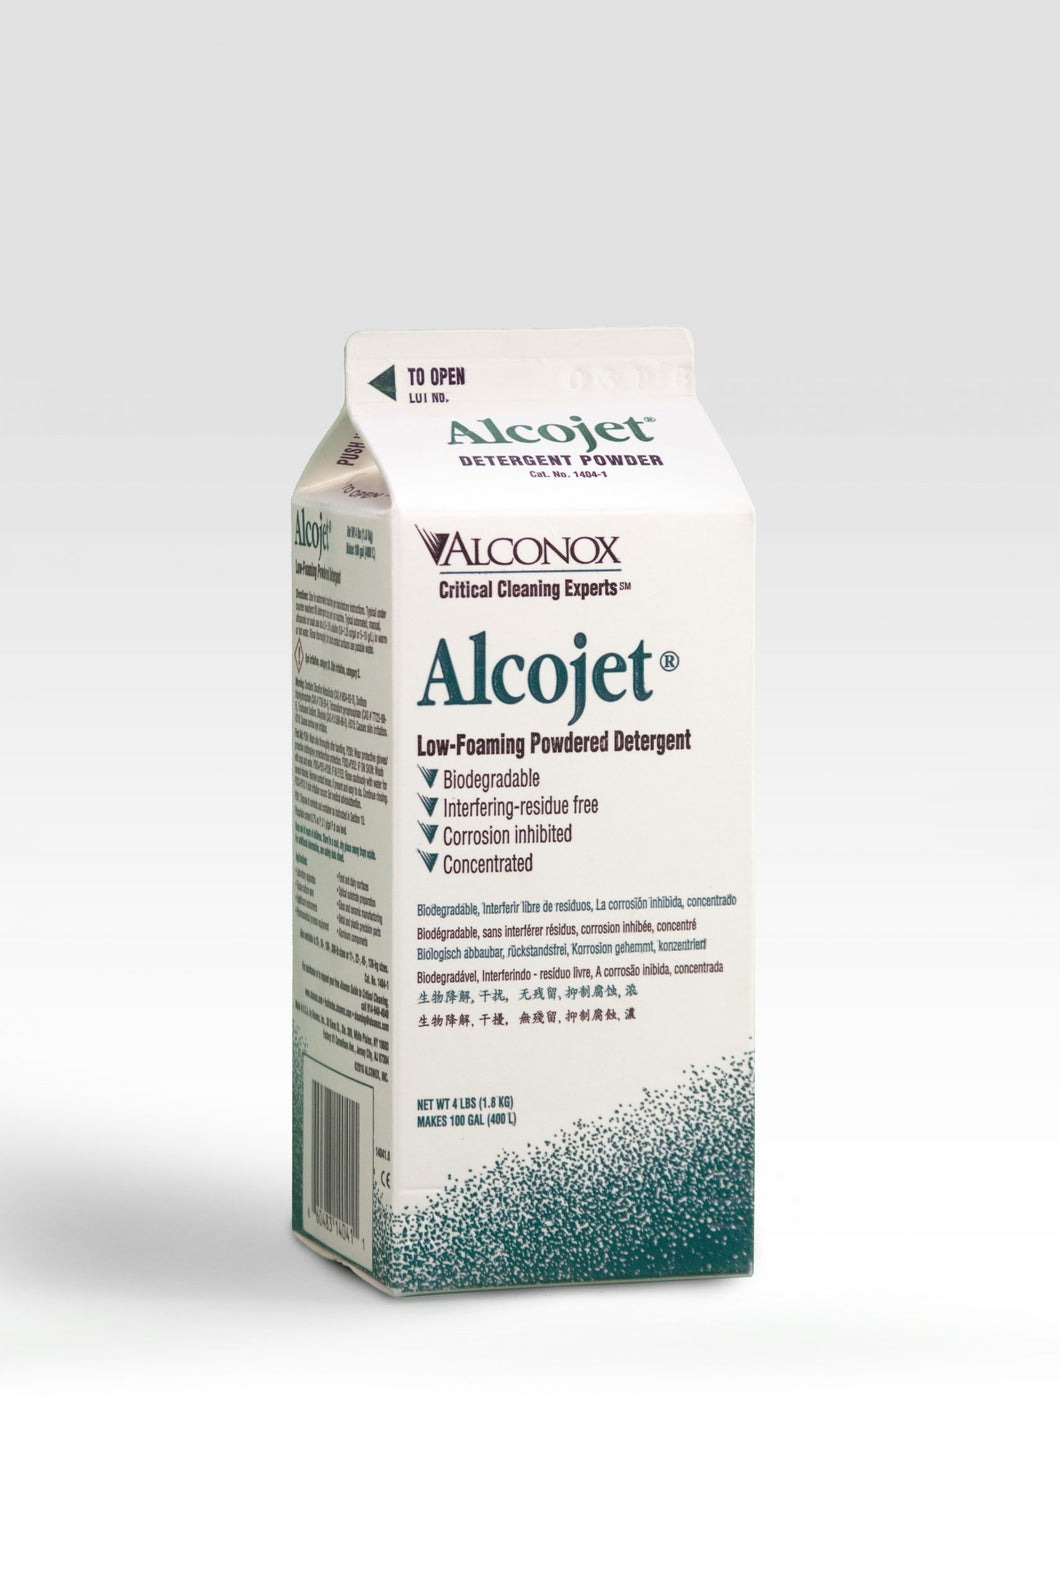 Alcojet 1450 Low-foaming Powdered Detergent 50 lb Box